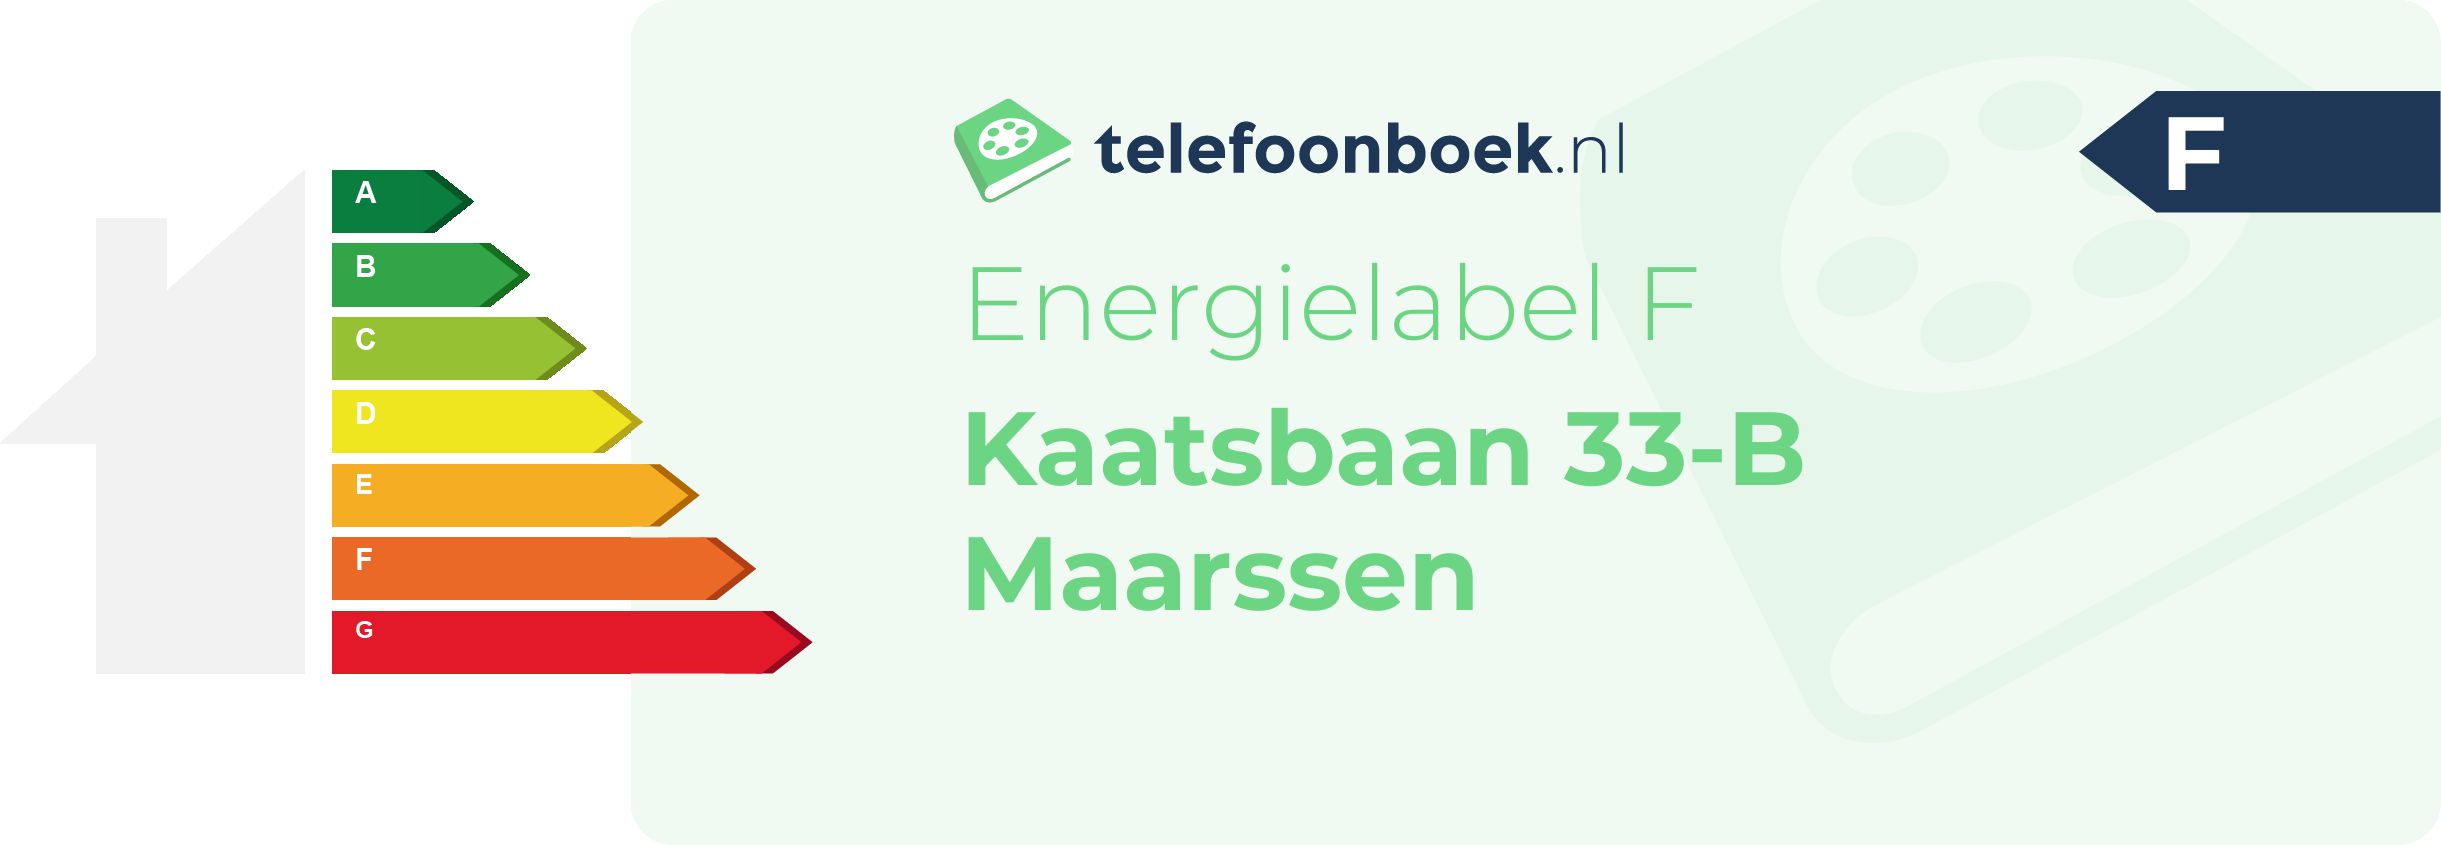 Energielabel Kaatsbaan 33-B Maarssen